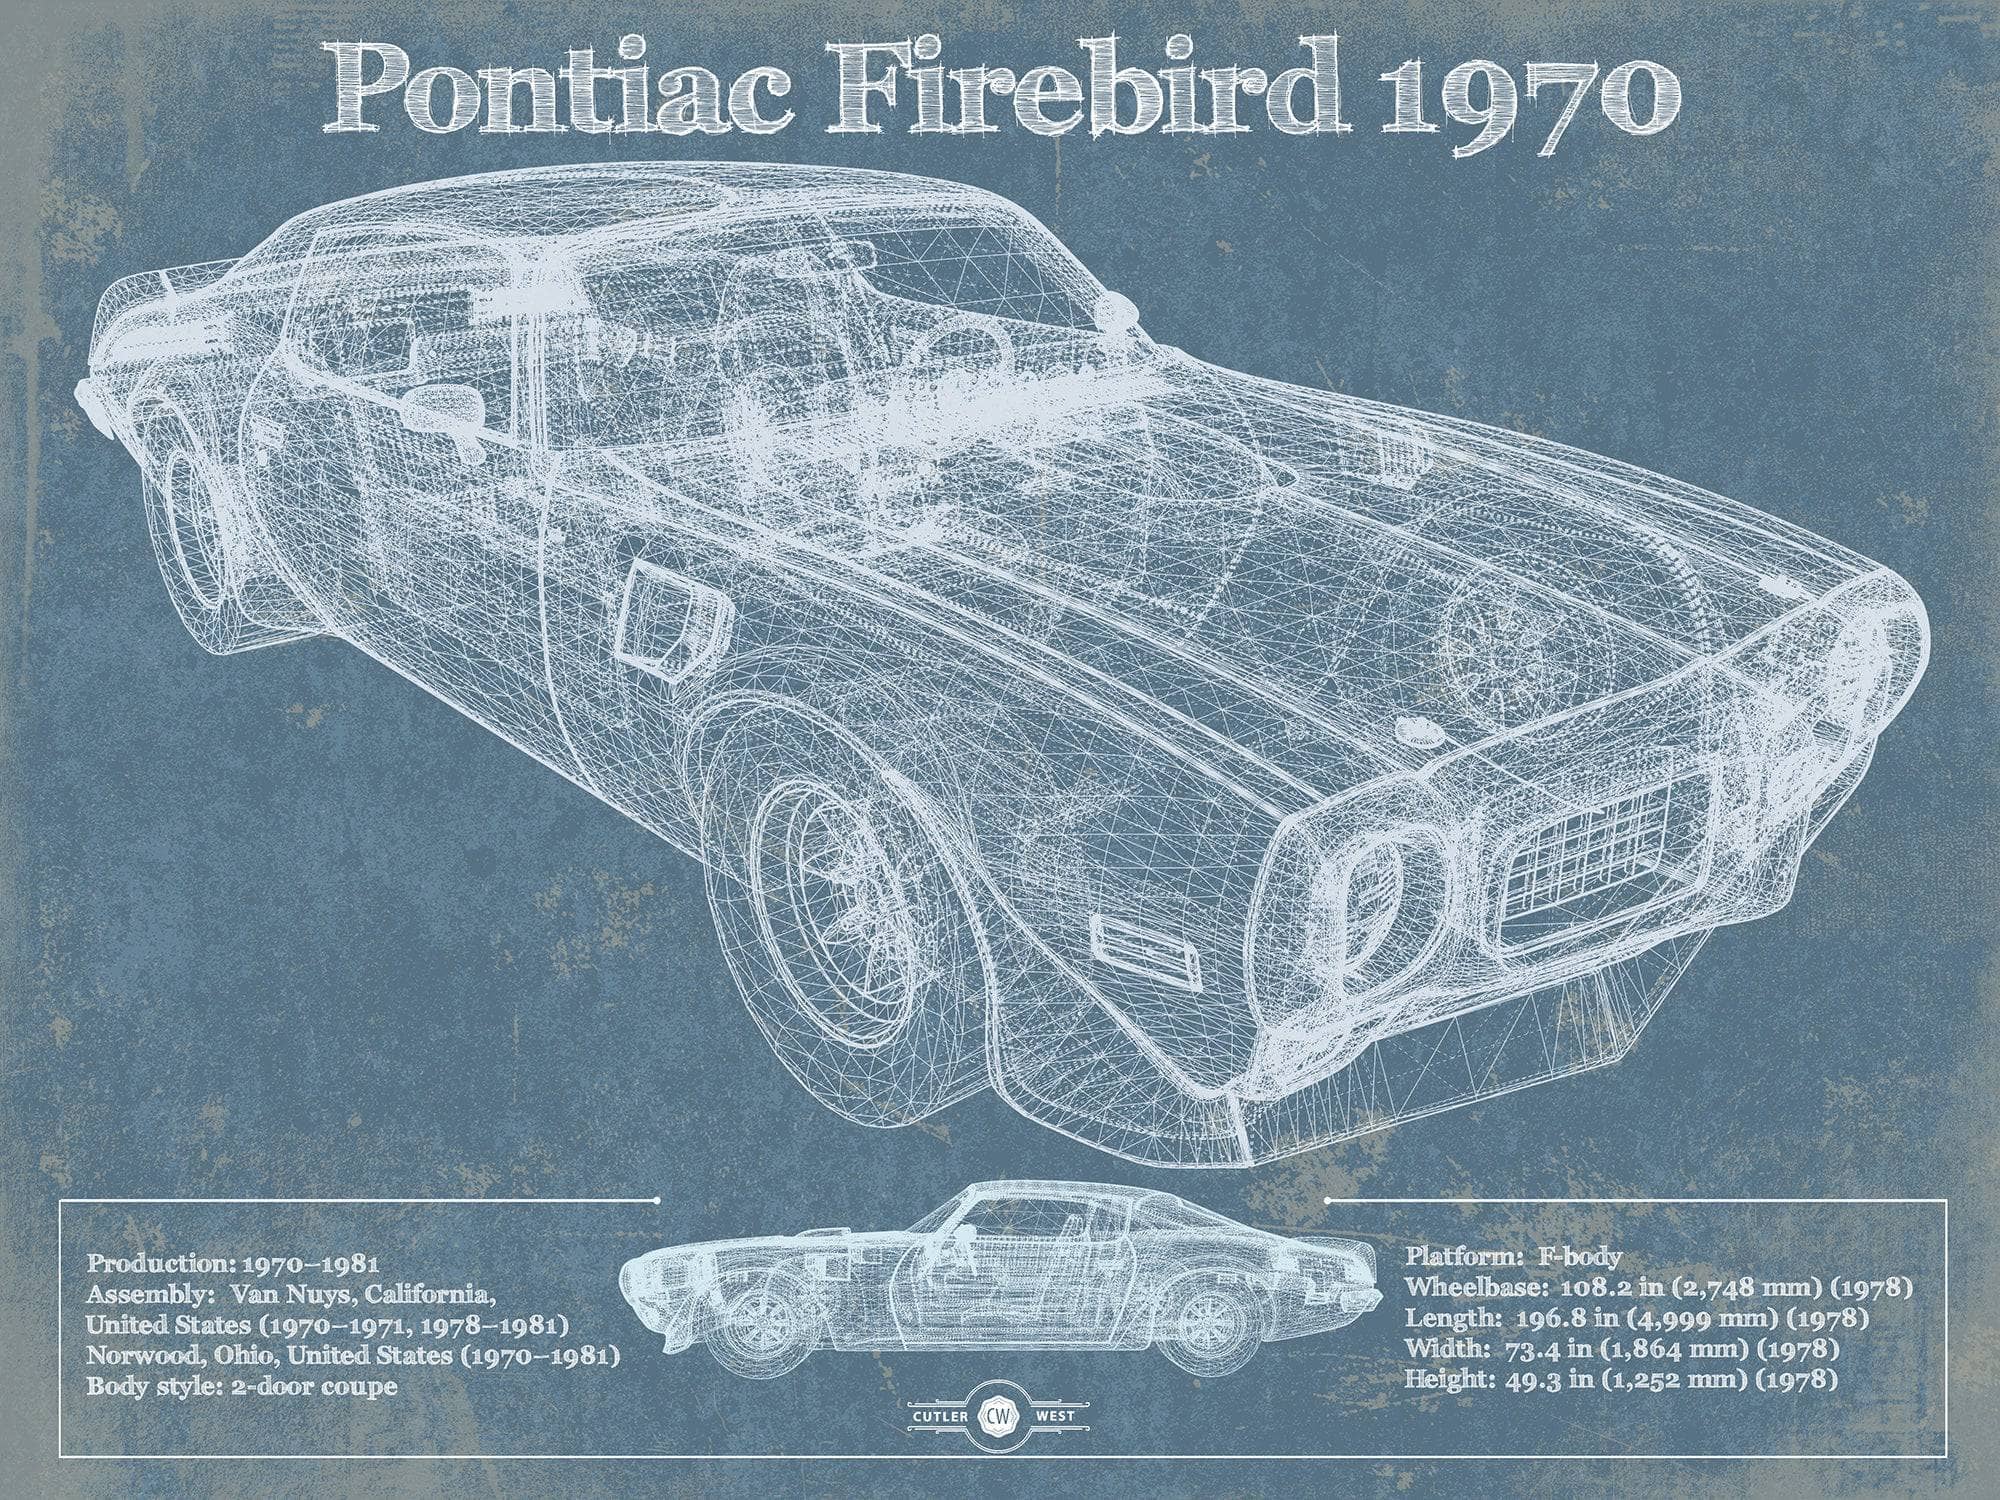 Cutler West 1970 Pontiac Firebird Vintage Auto Print